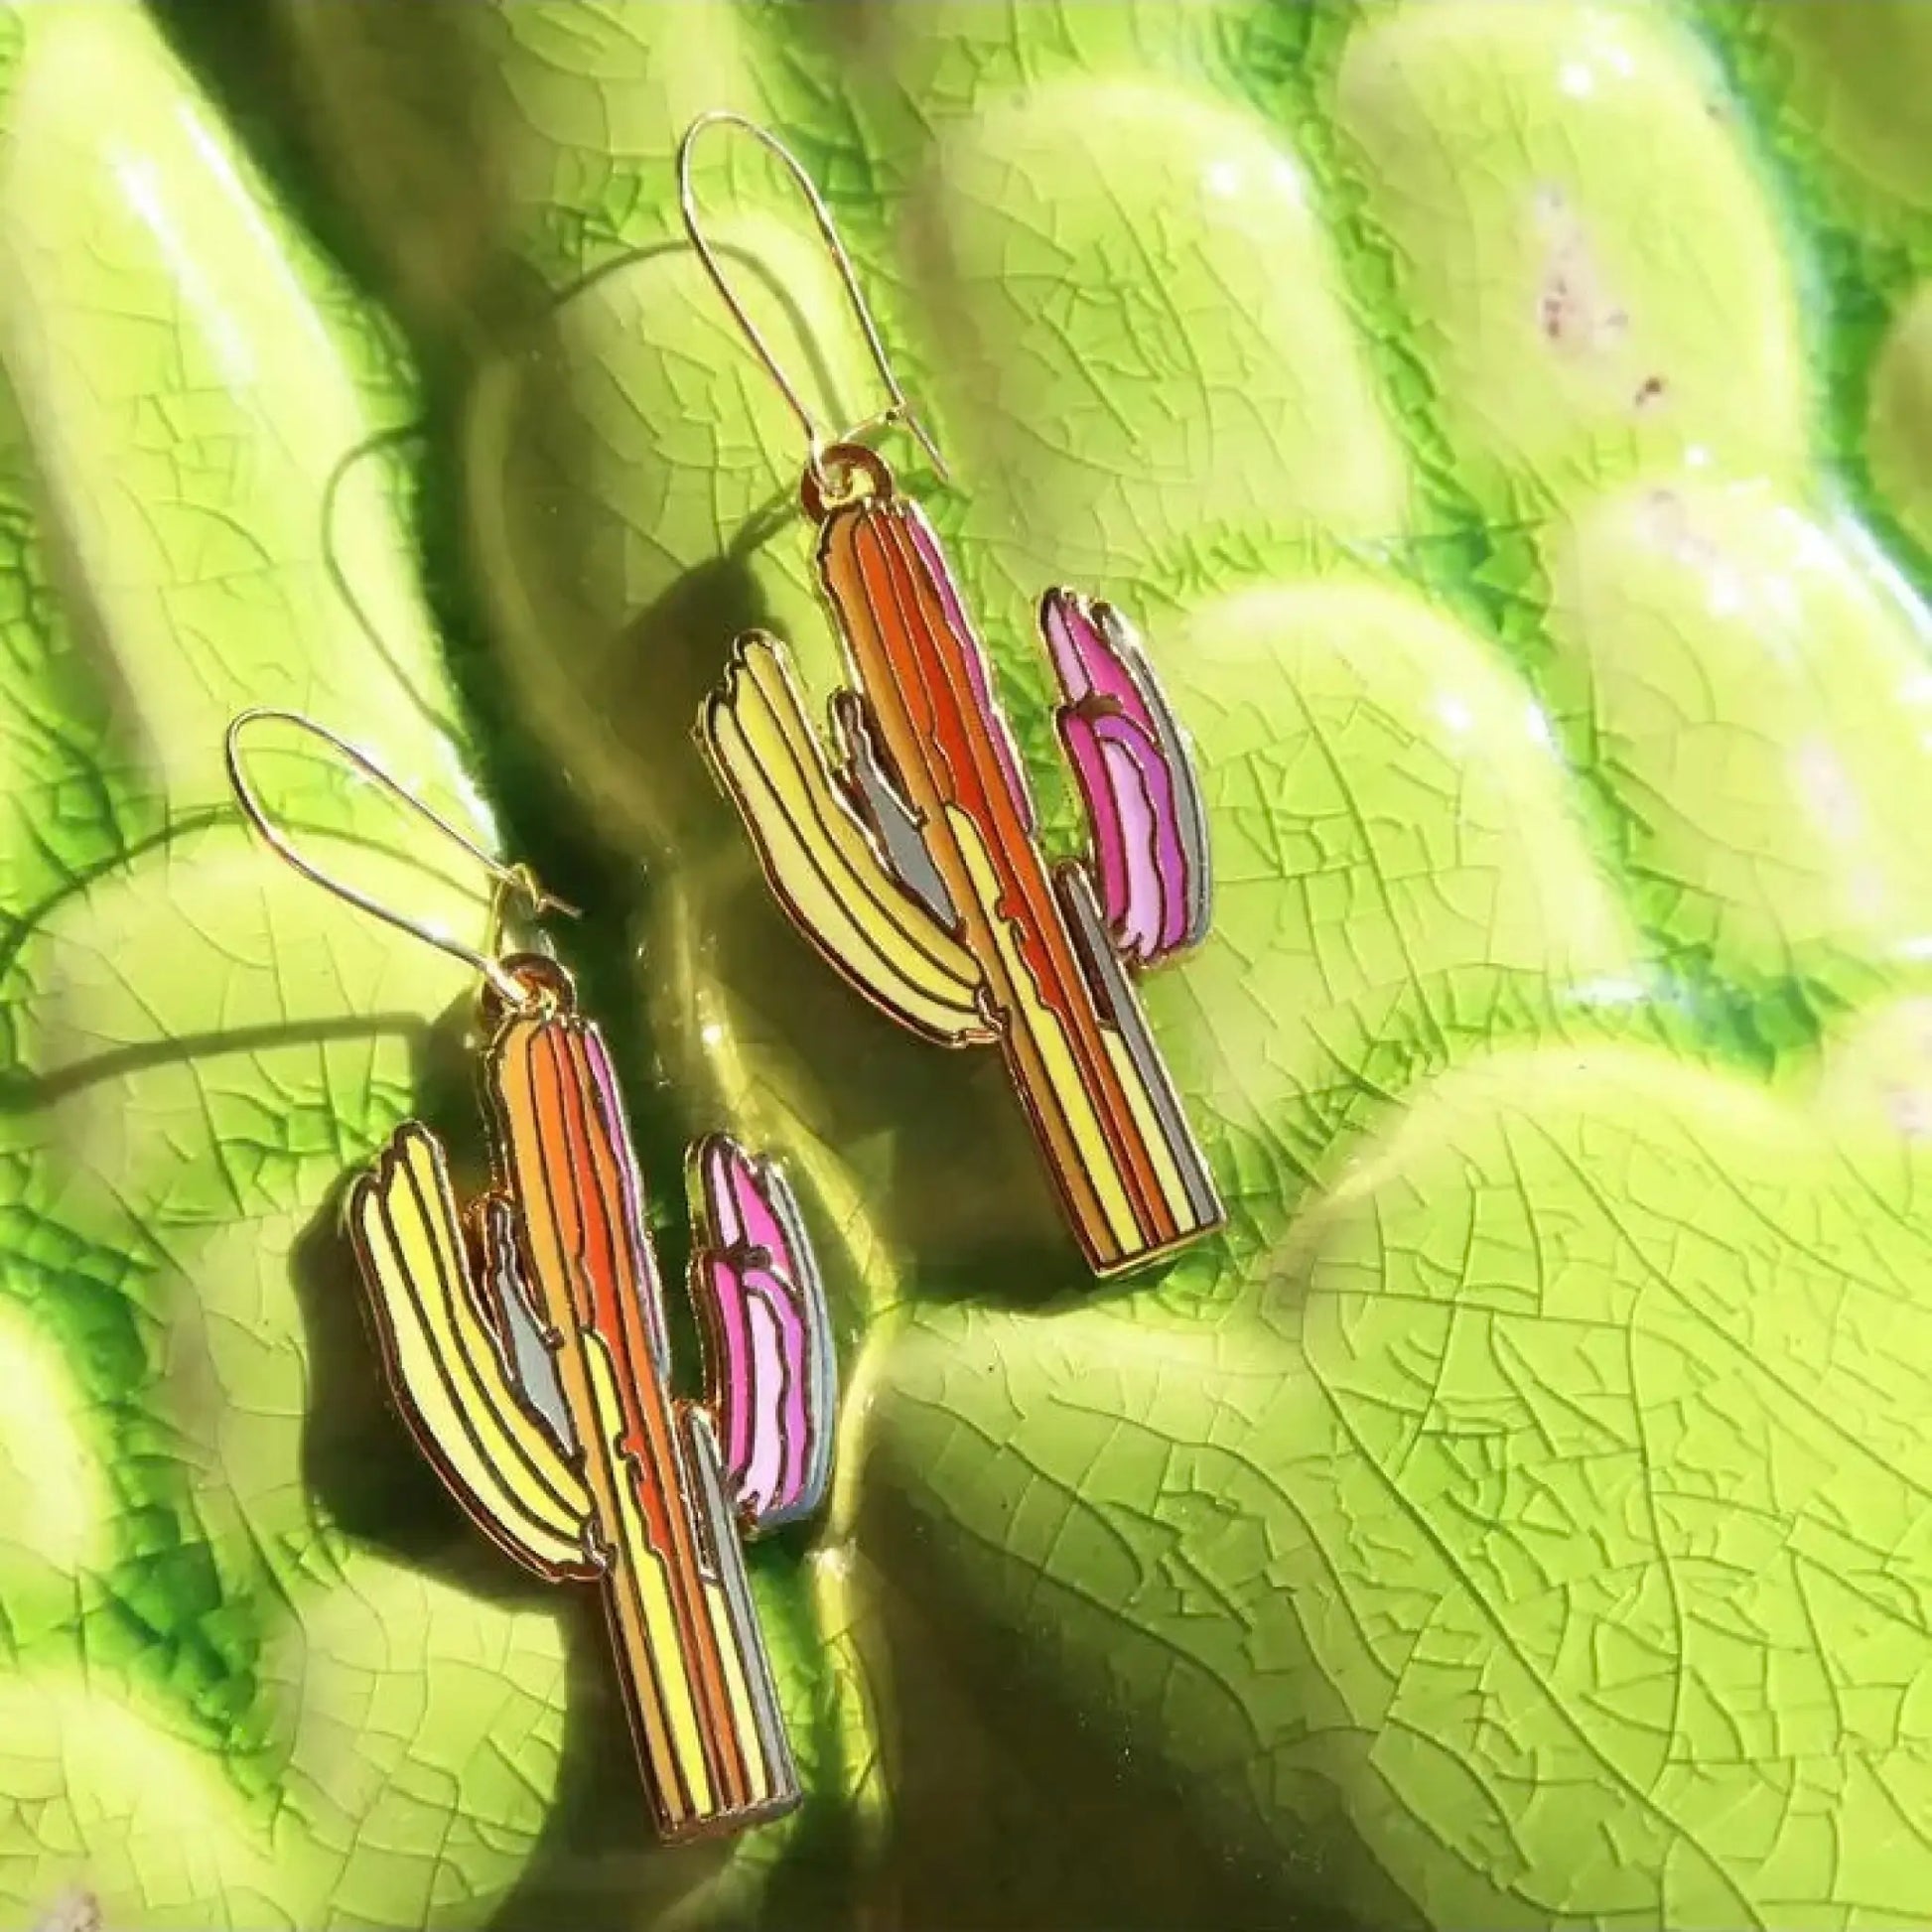 Technicolor Saguaro earrings - Jewelry